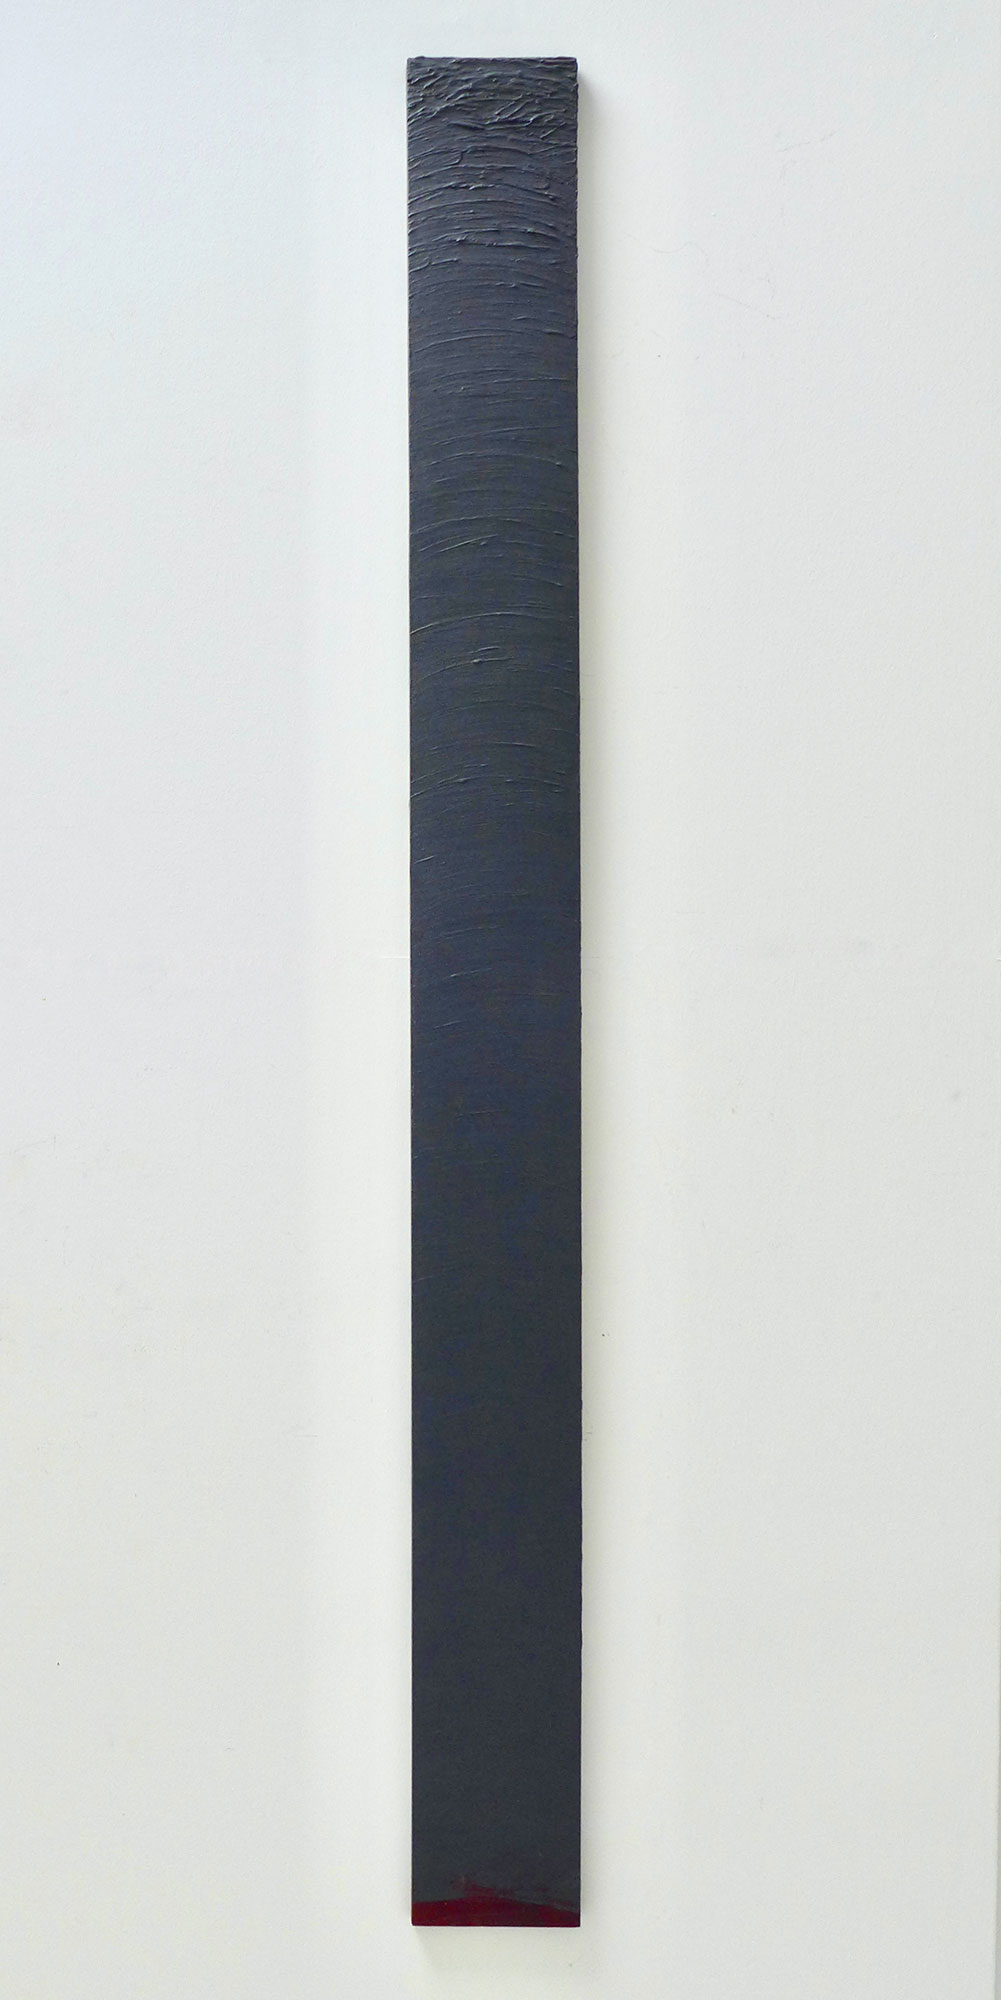 Kenneth Dingwall, Distract II, 1977, acrylic on wood, 167cm x 15cm